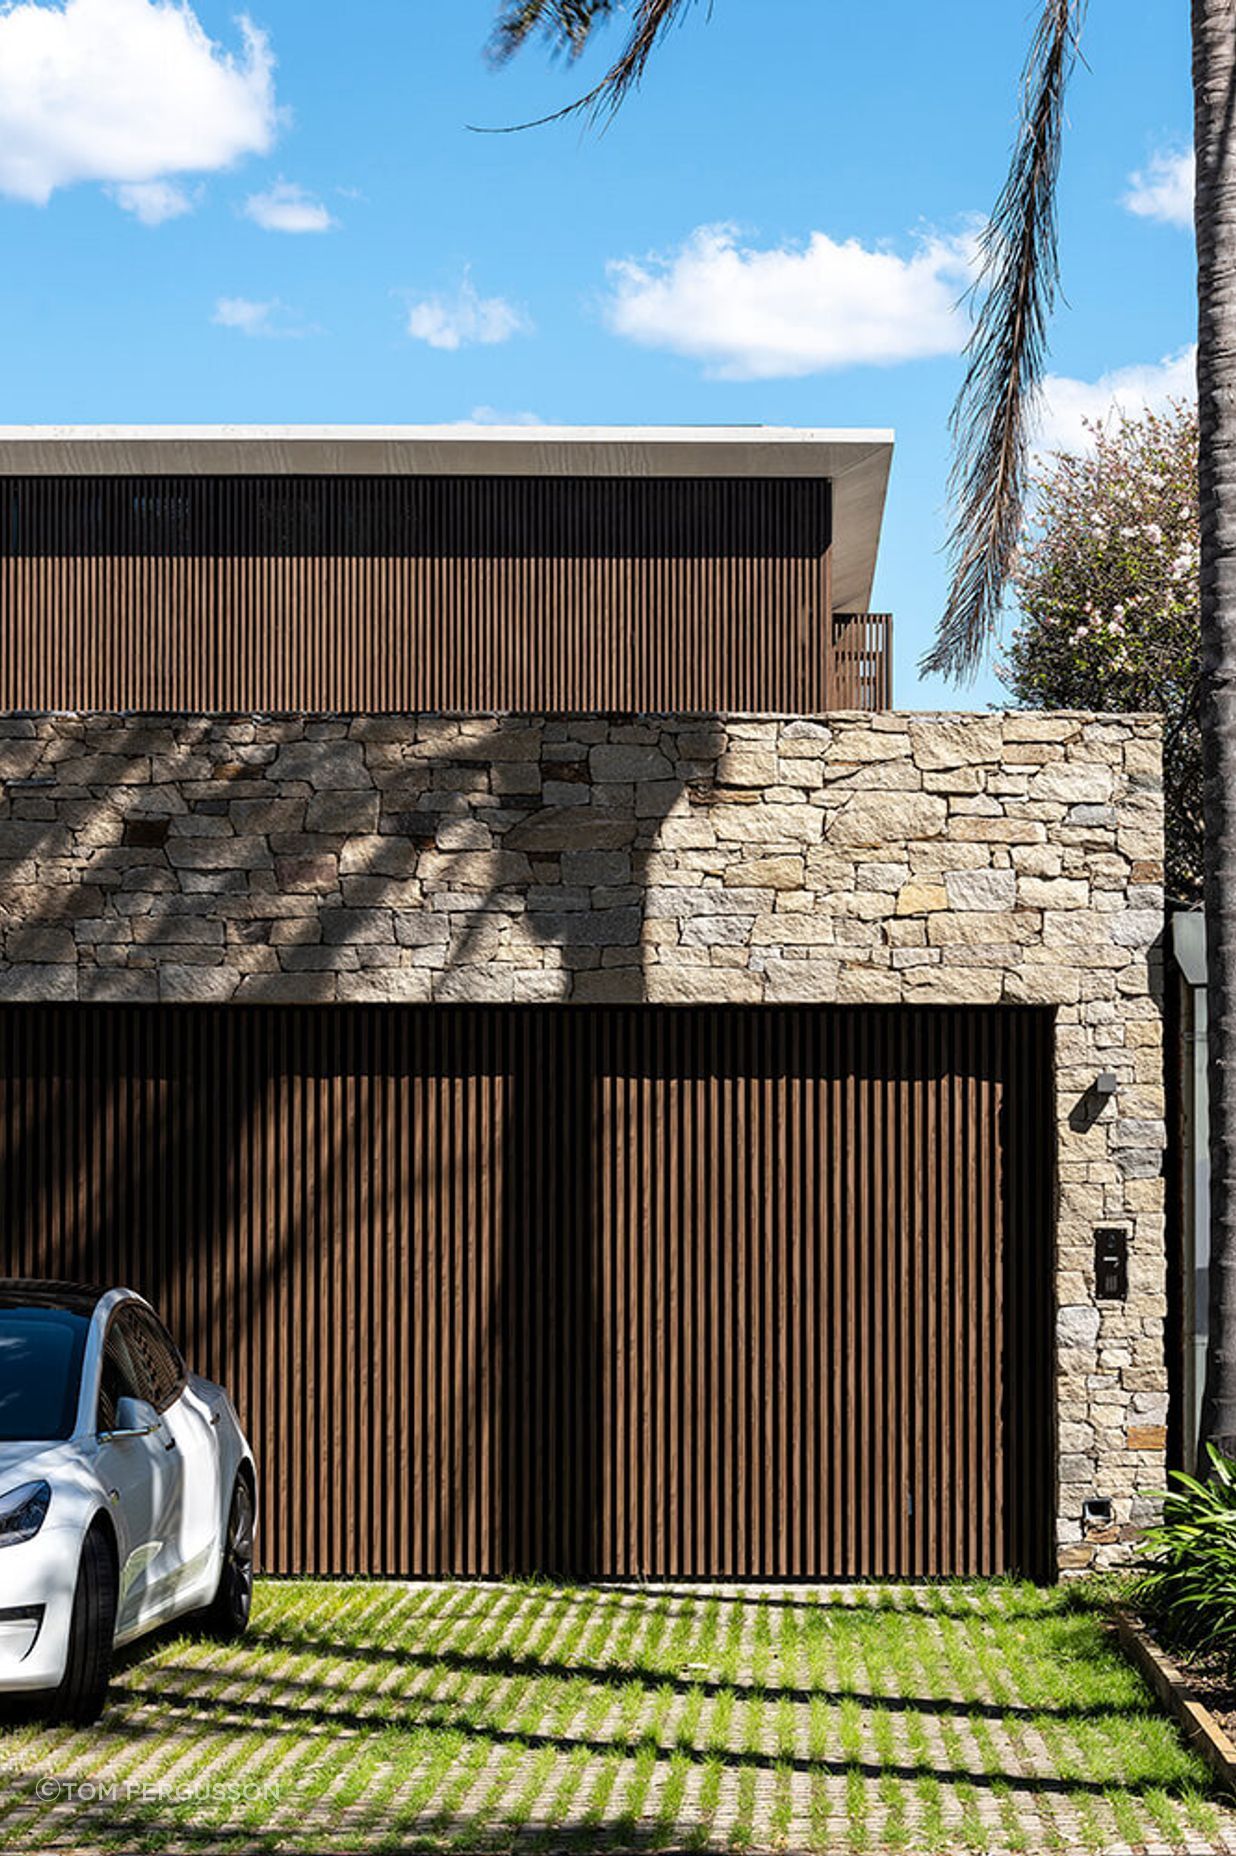 The Kabebari cladding is also featured on the garage door.